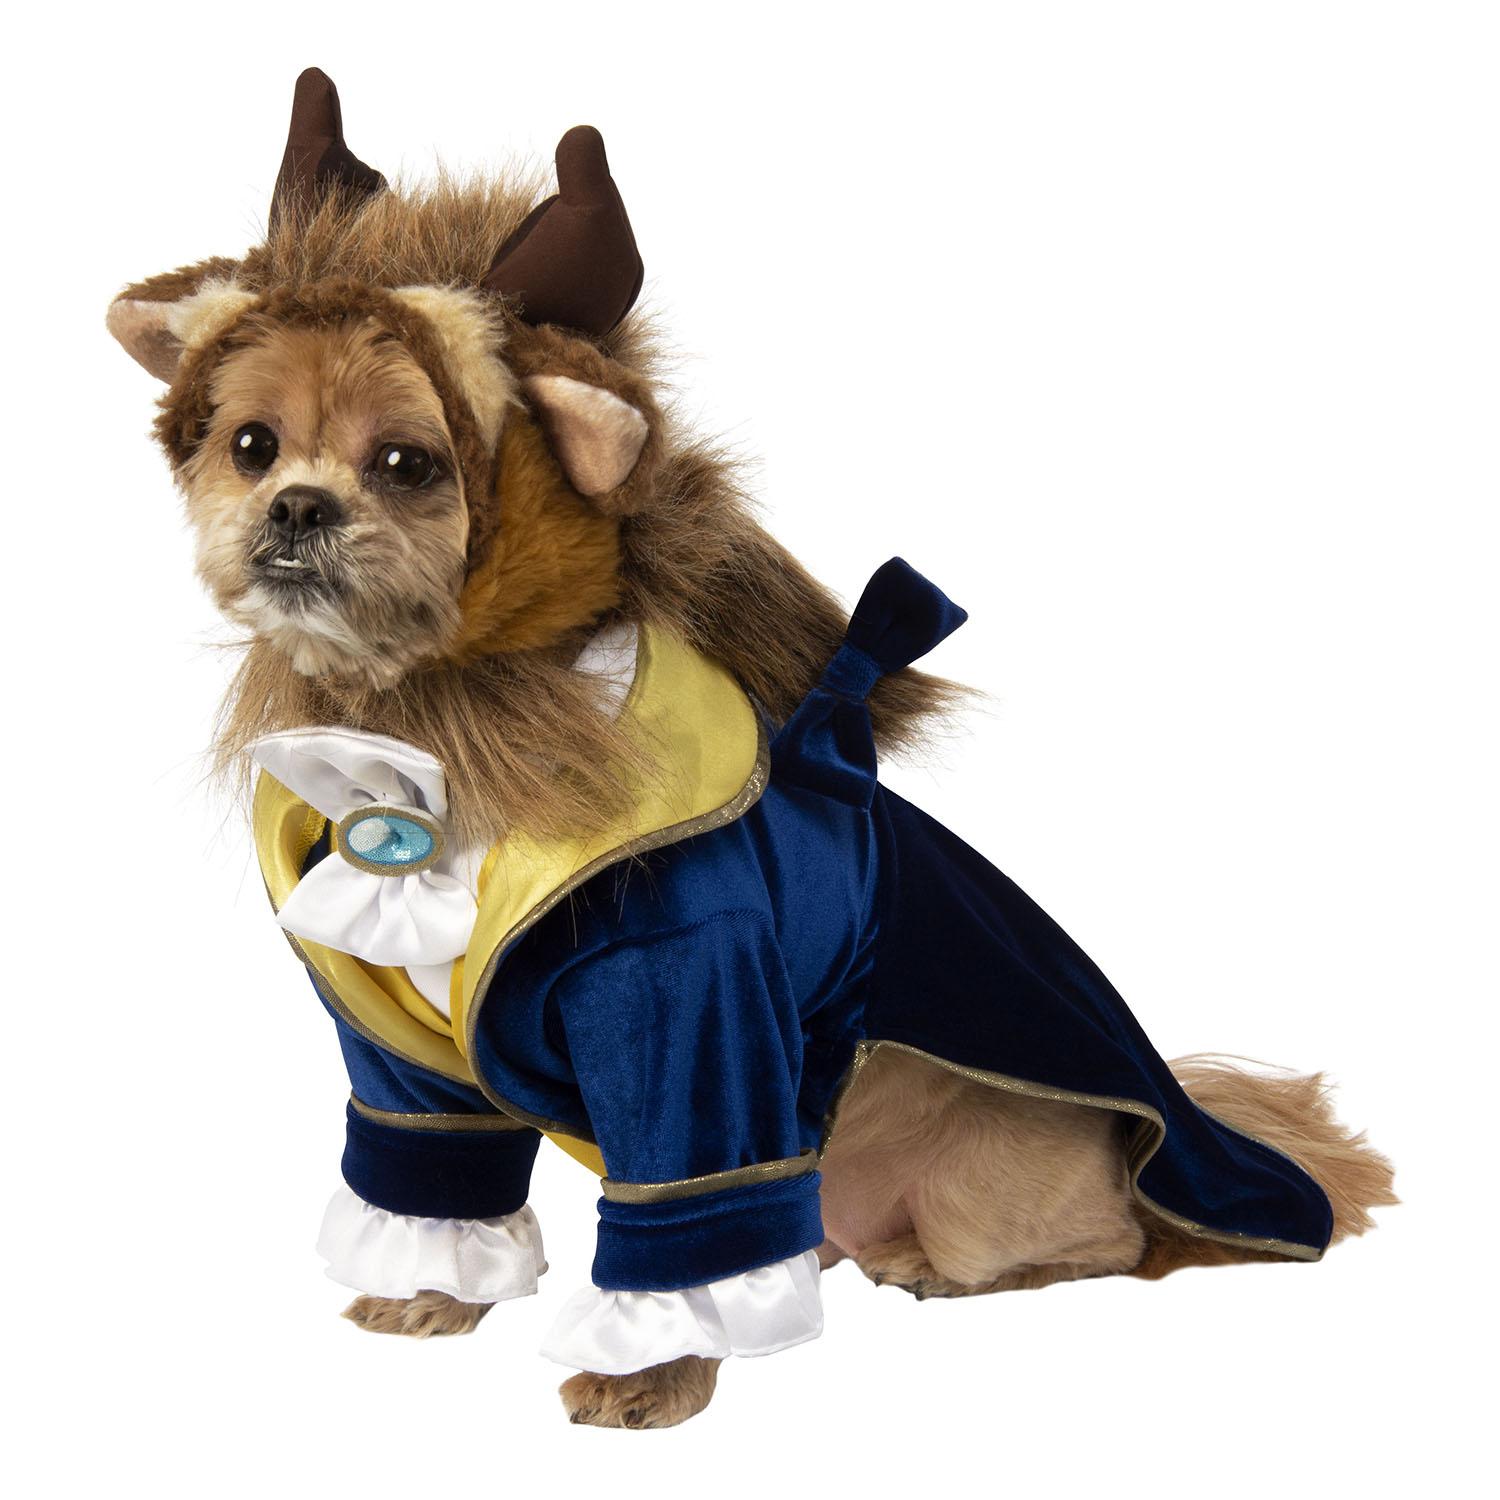 Beauty and the Beast Dog Costume by Rubie's - Beast